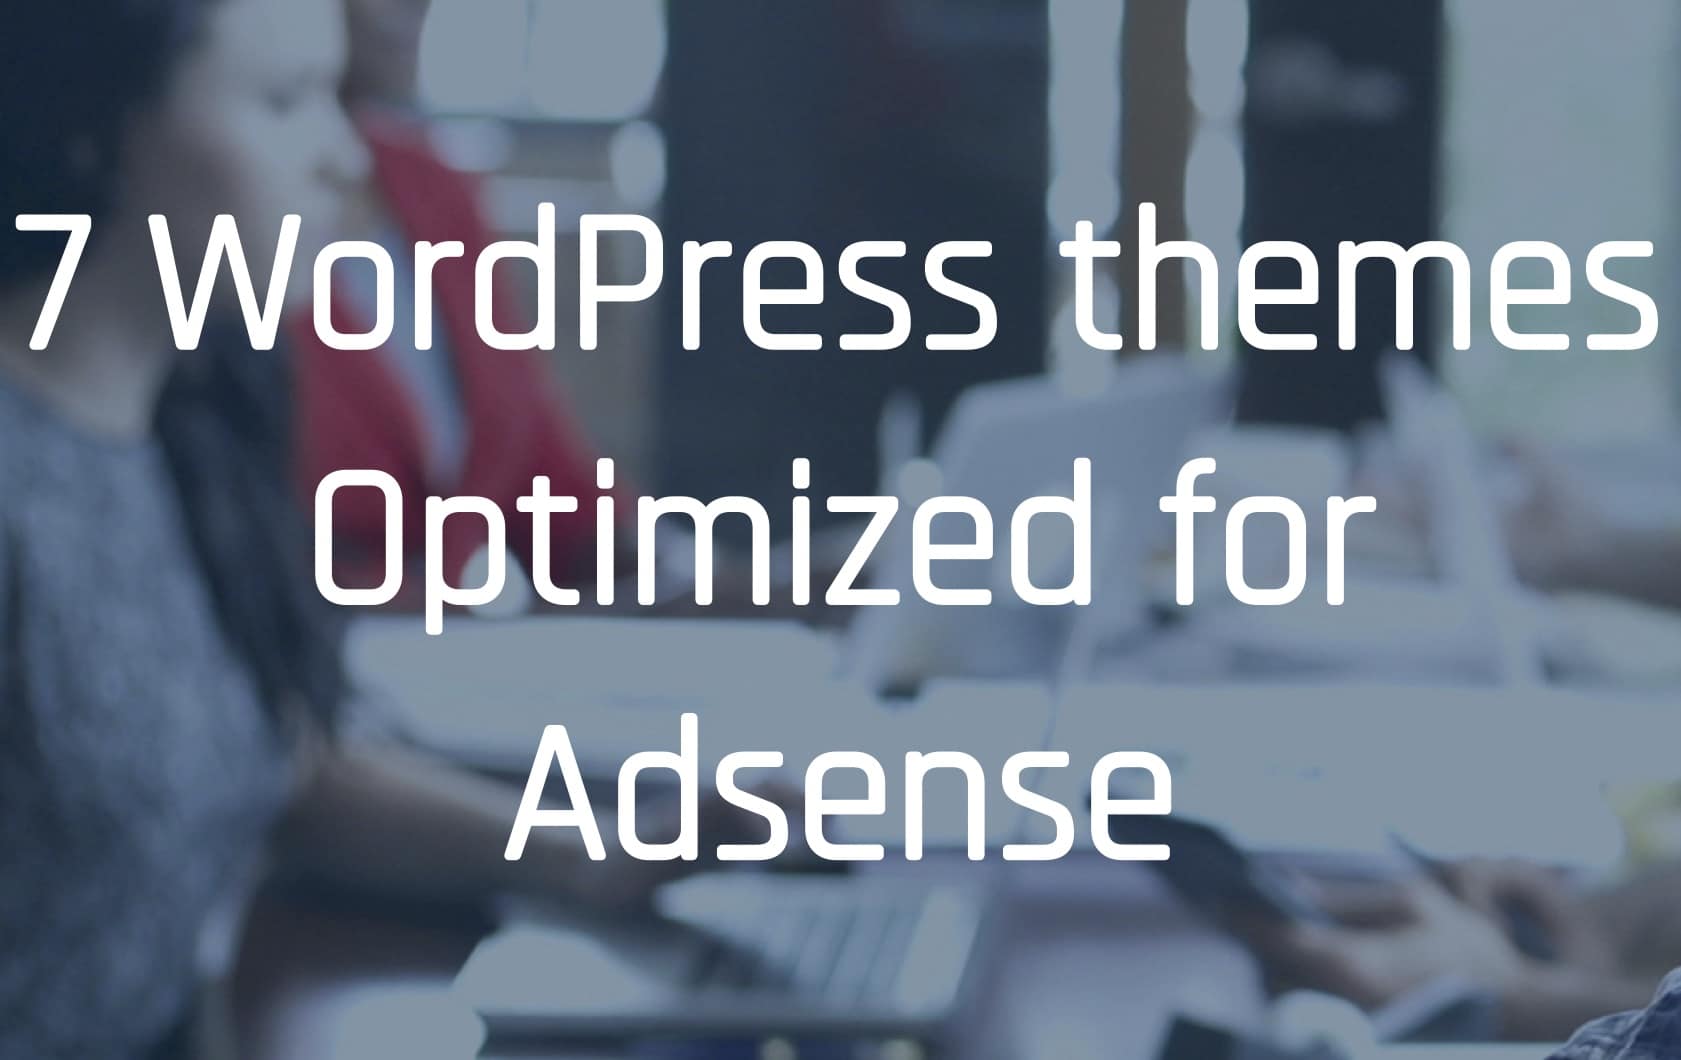 A screenshot of seven Wordpress themes optimized for Adsense.